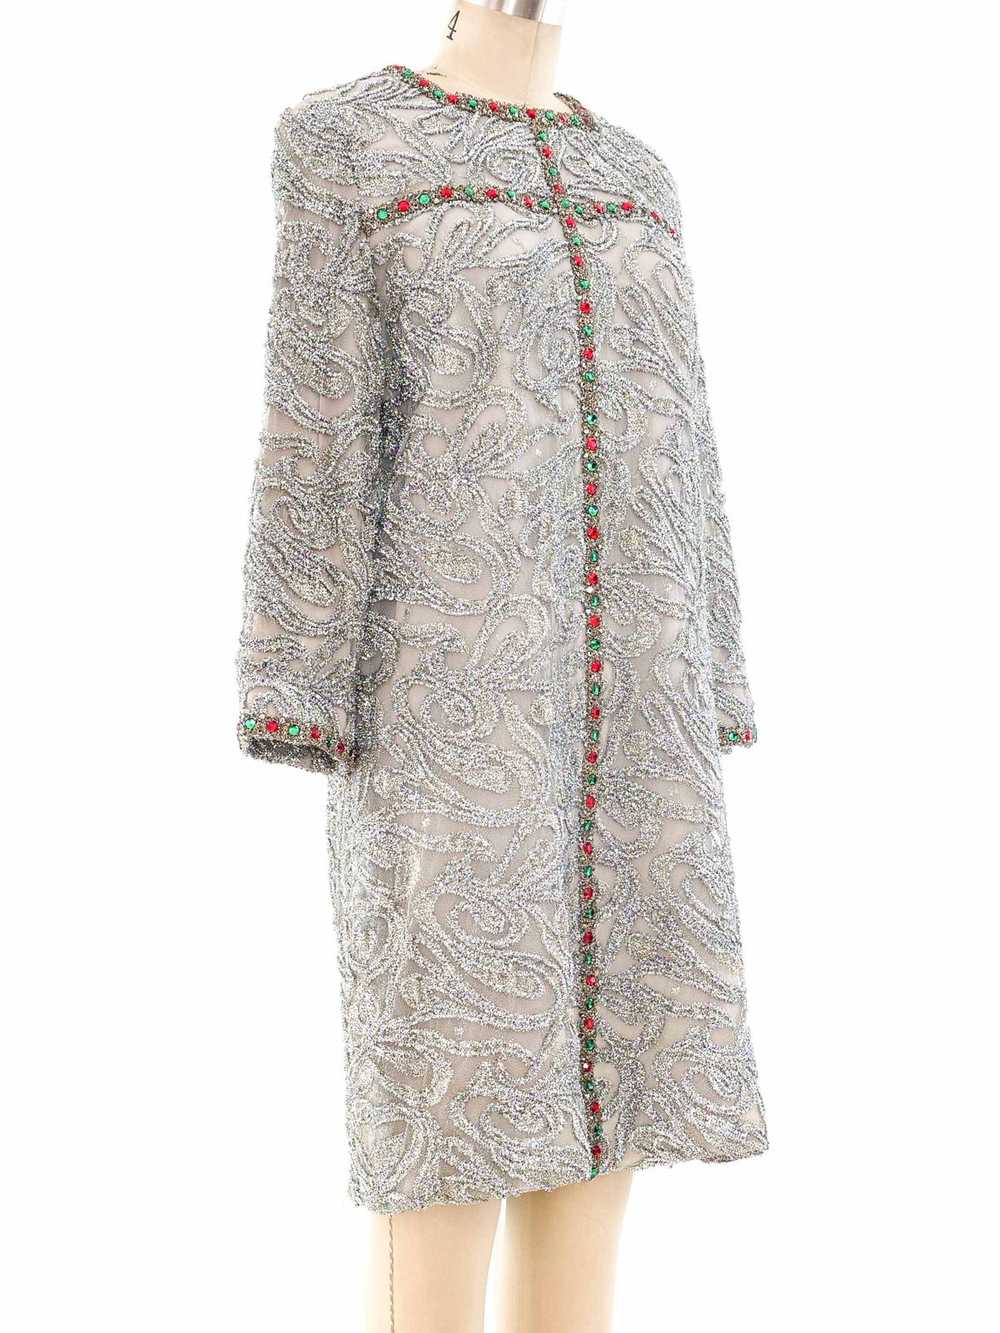 Bill Blass Tinsel and Crystal Embellished Dress - image 2